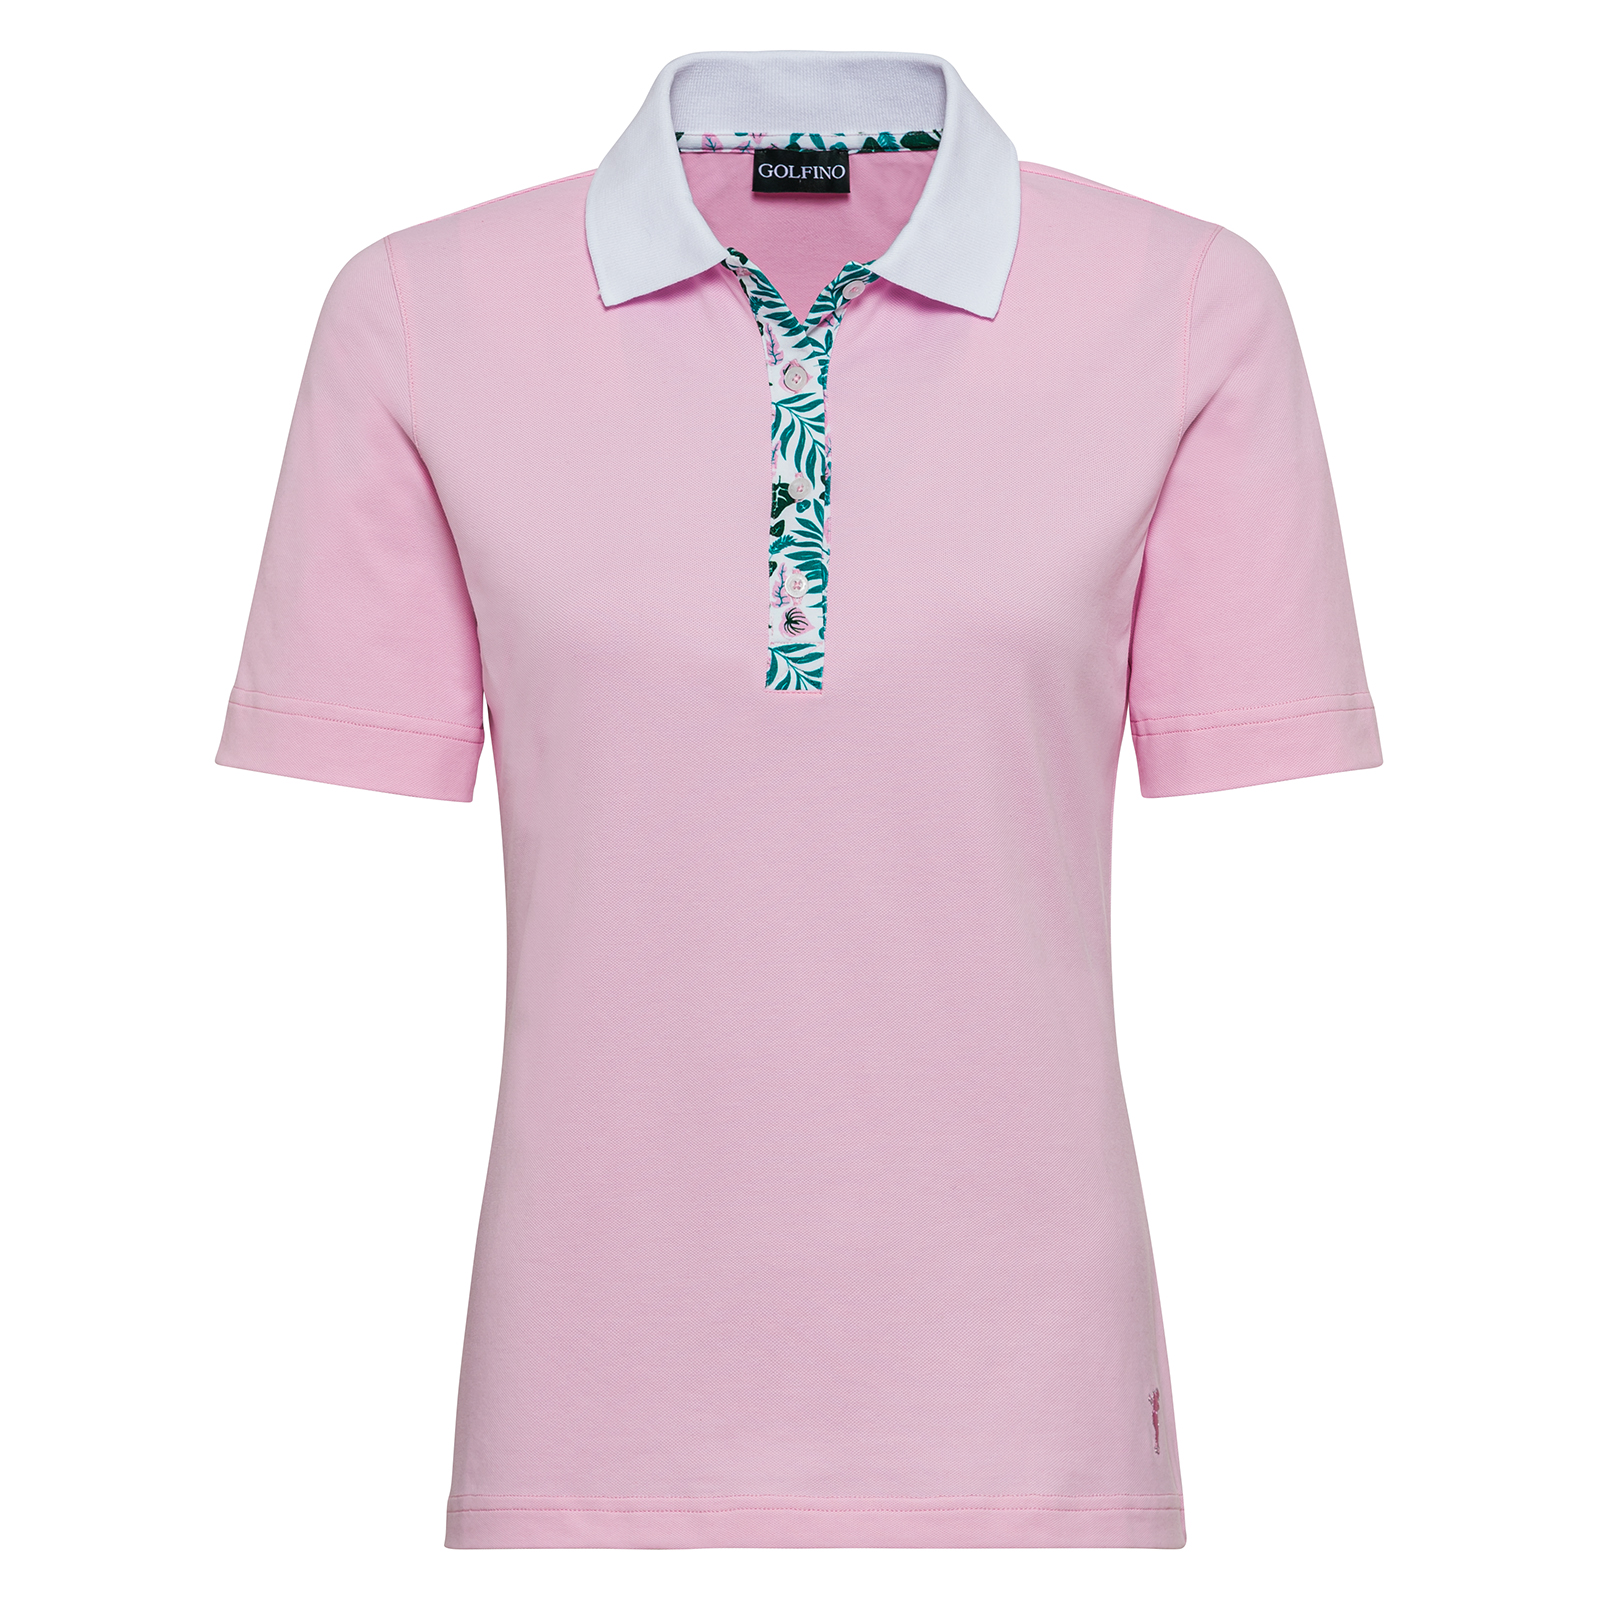 GOLFINO Damen Poloshirt Gr Damen Bekleidung Shirts & Tops Poloshirts DE 36 